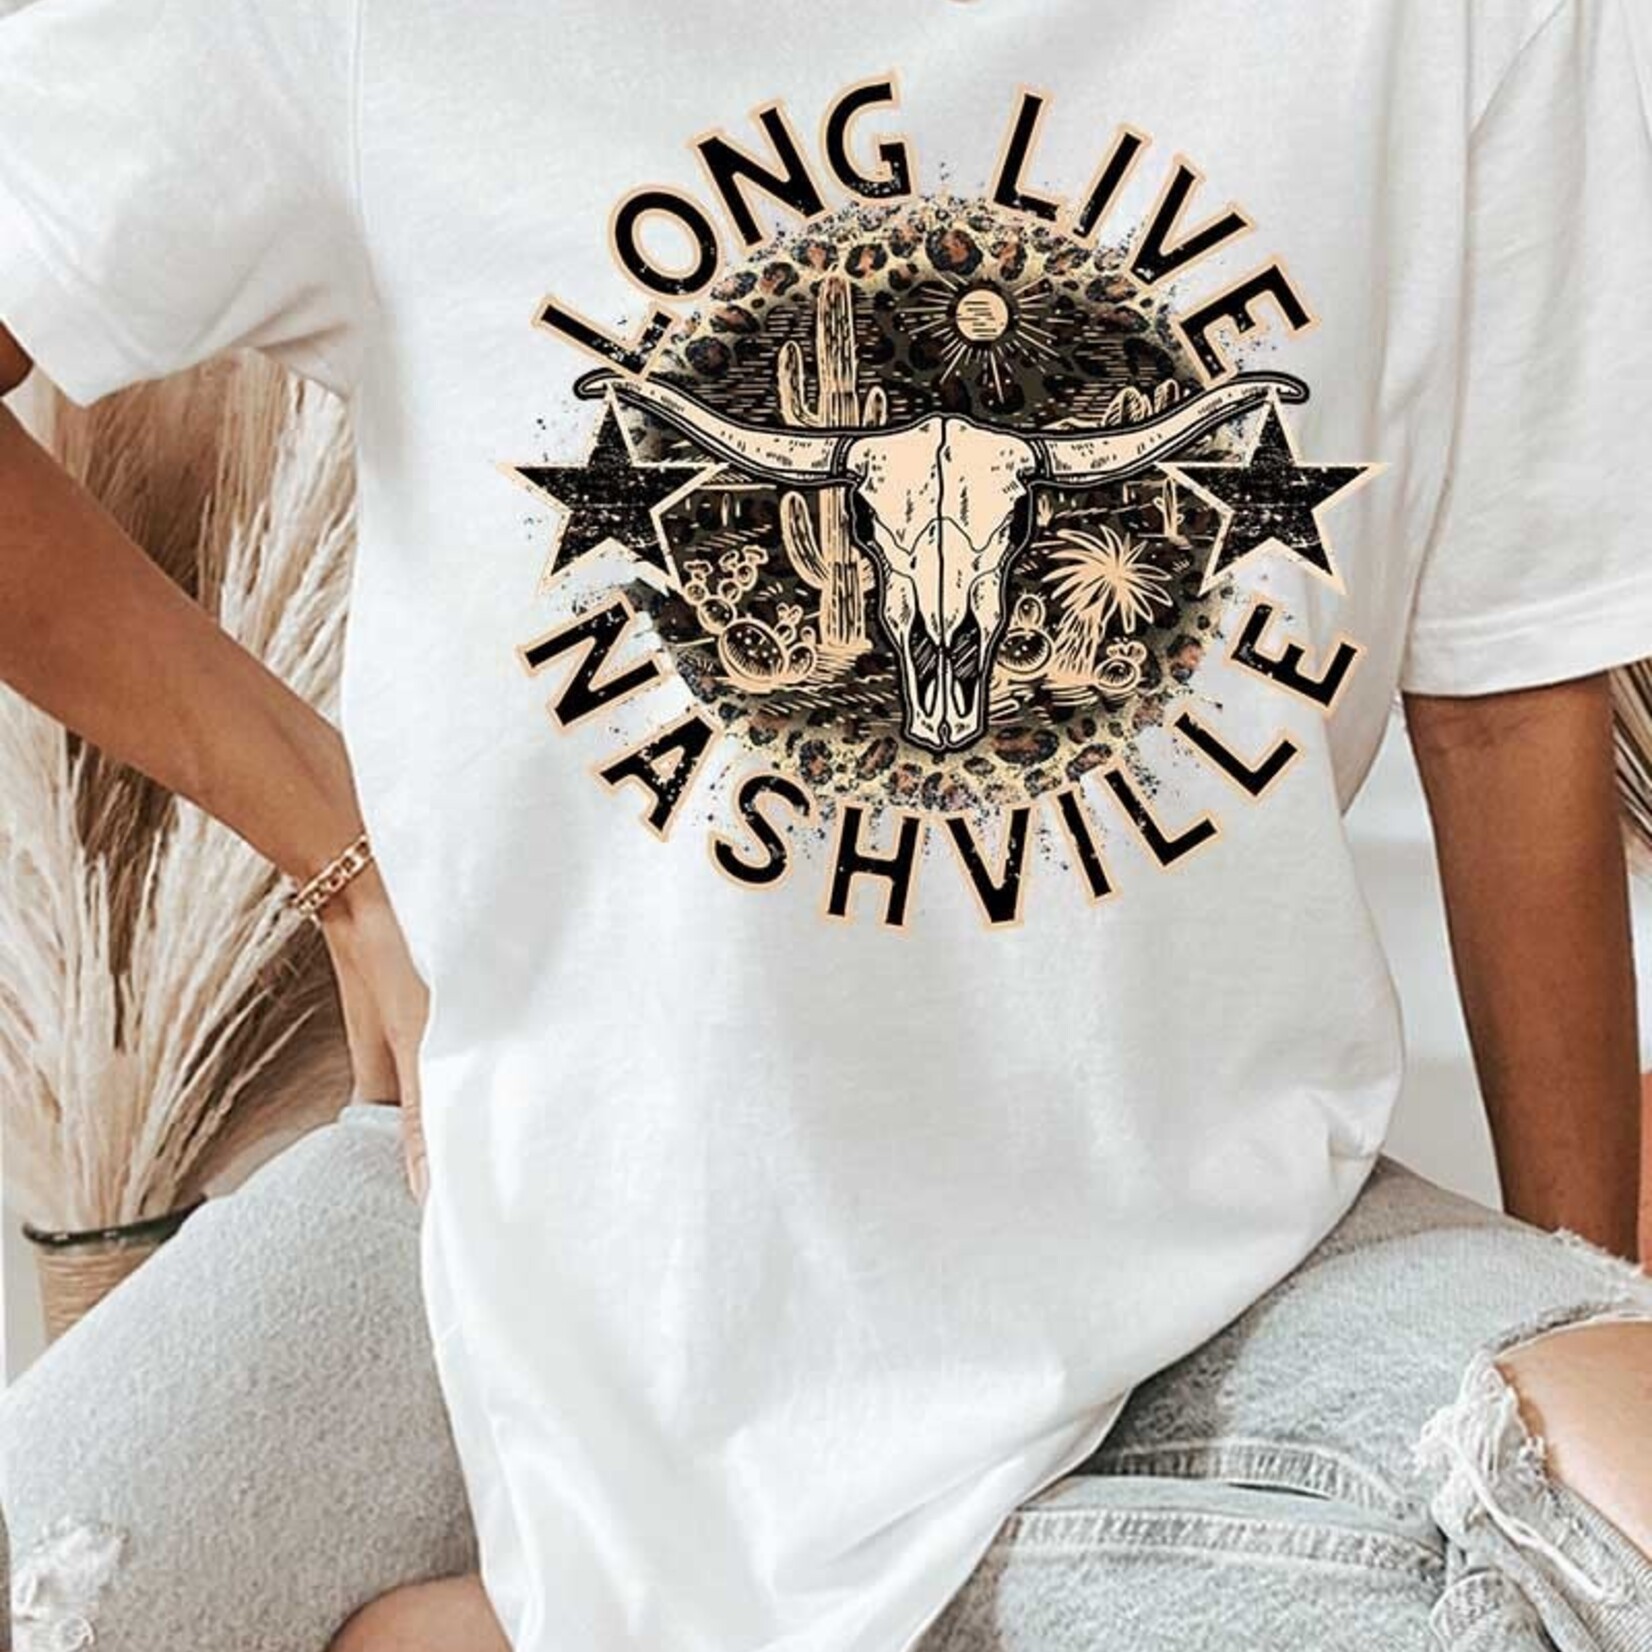 True Long Live Nashville tee